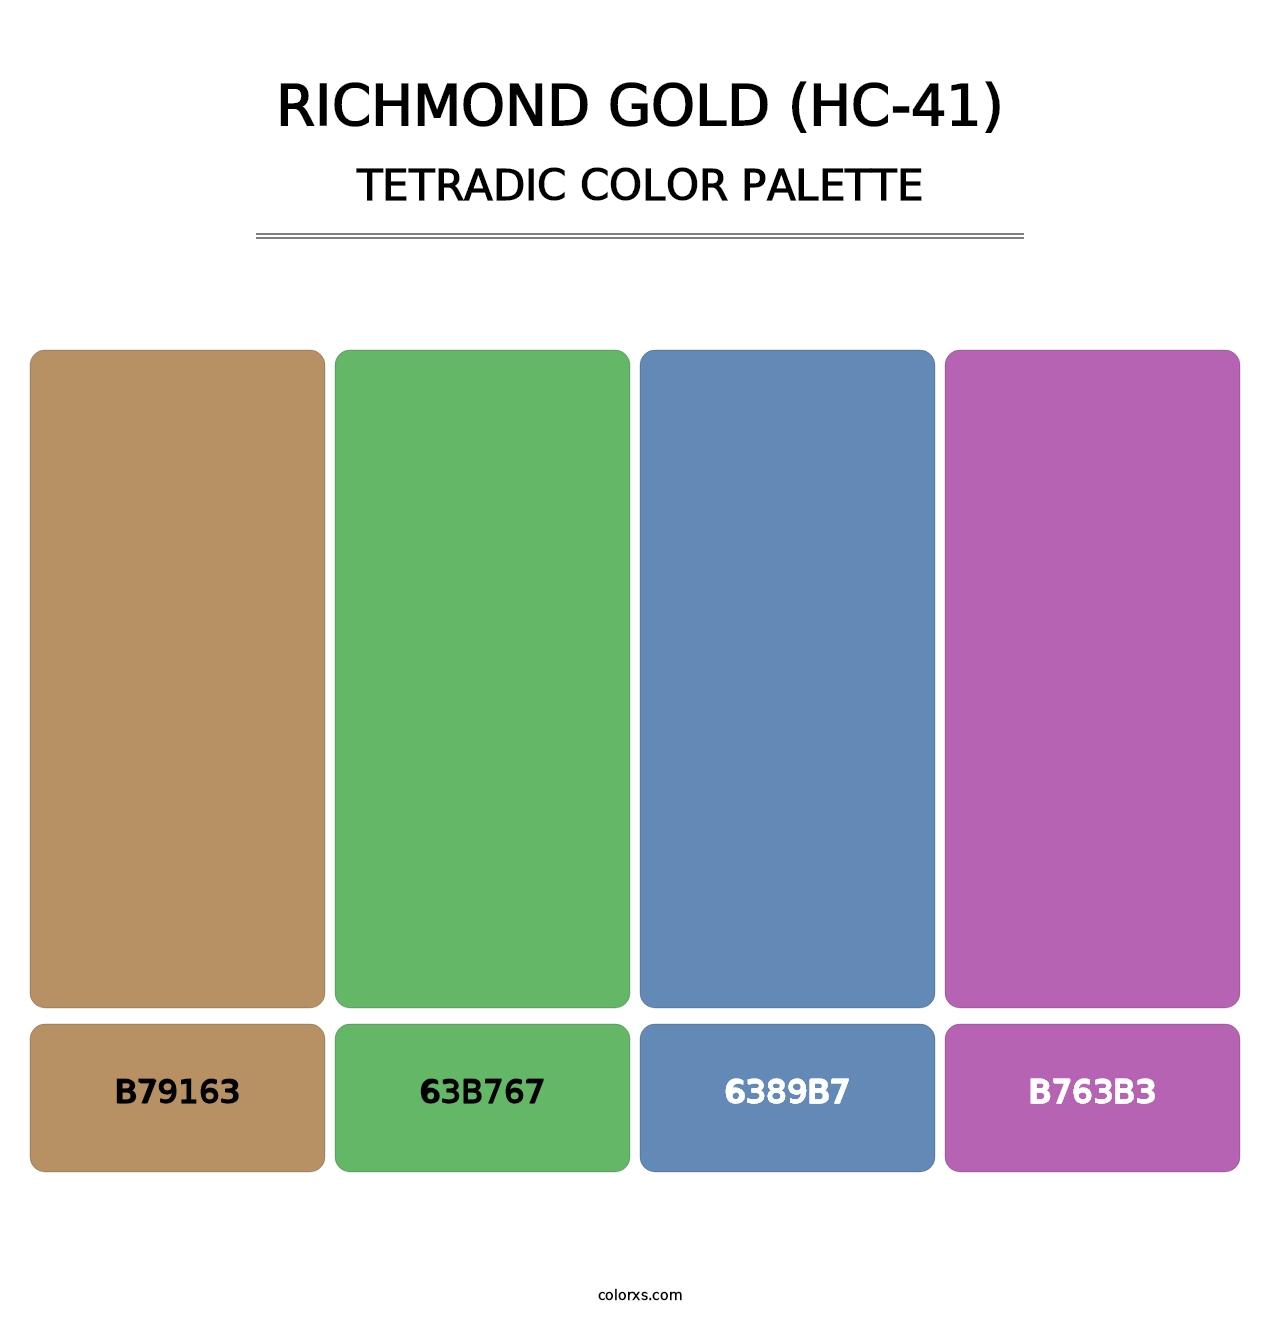 Richmond Gold (HC-41) - Tetradic Color Palette